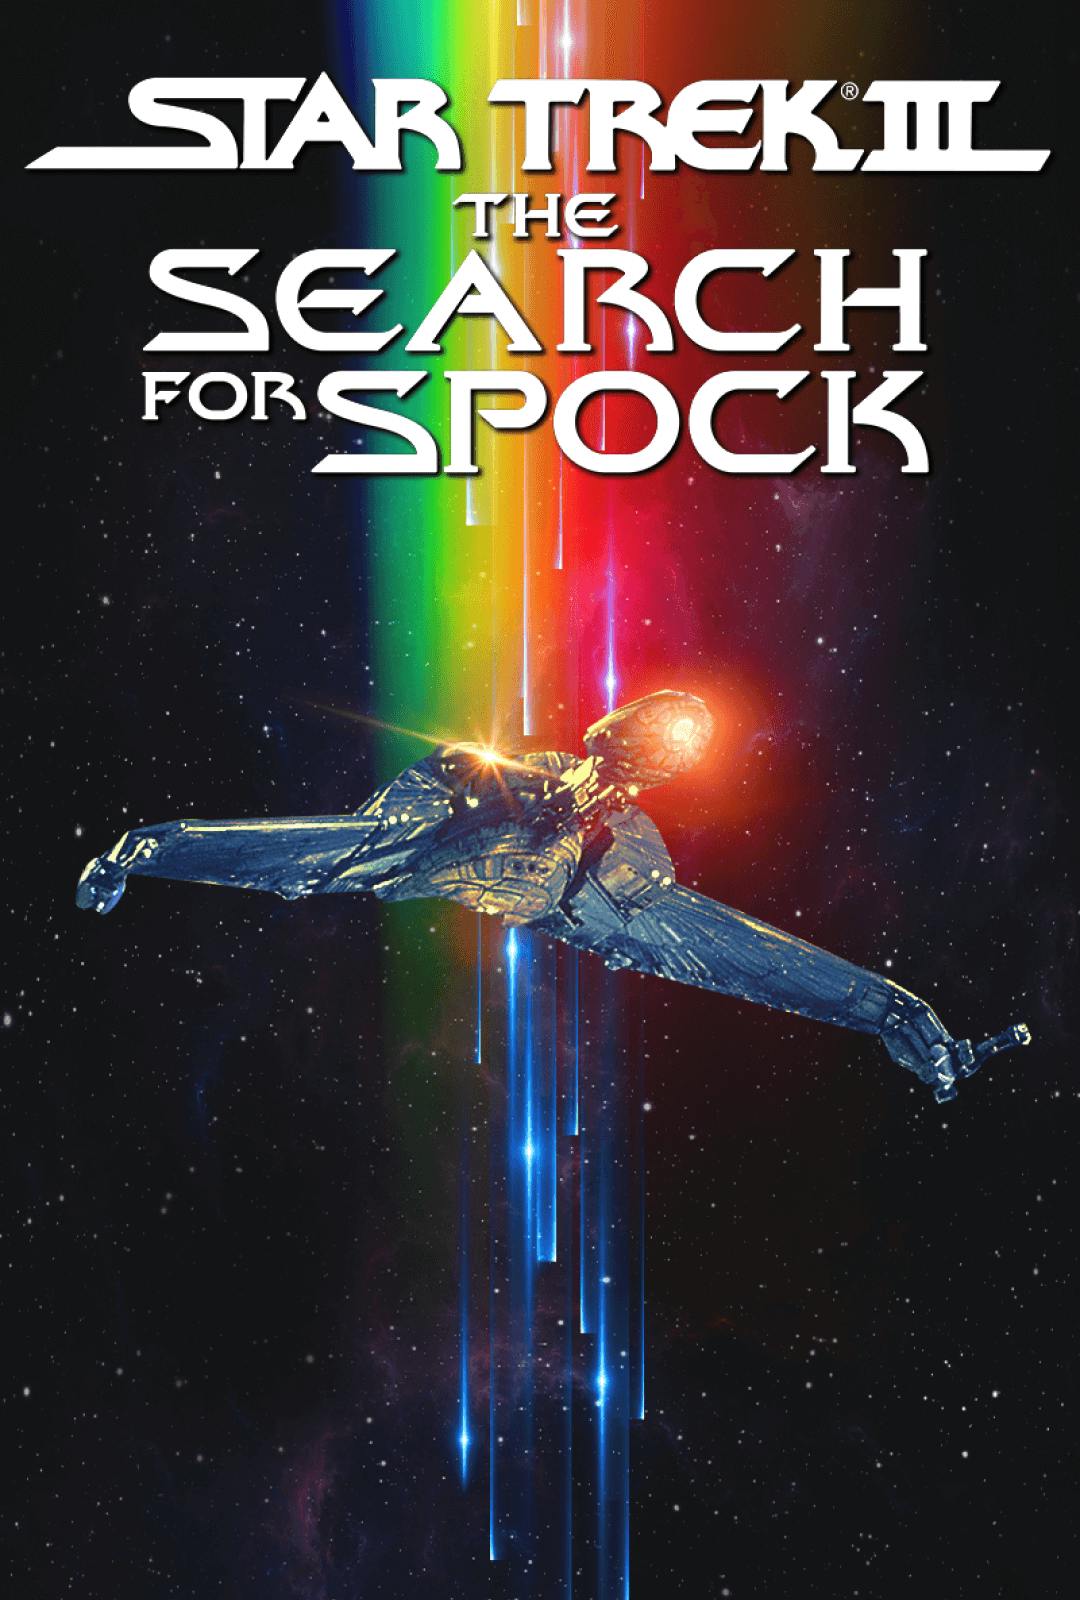 Poster art for Star Trek III: The Search for Spock 